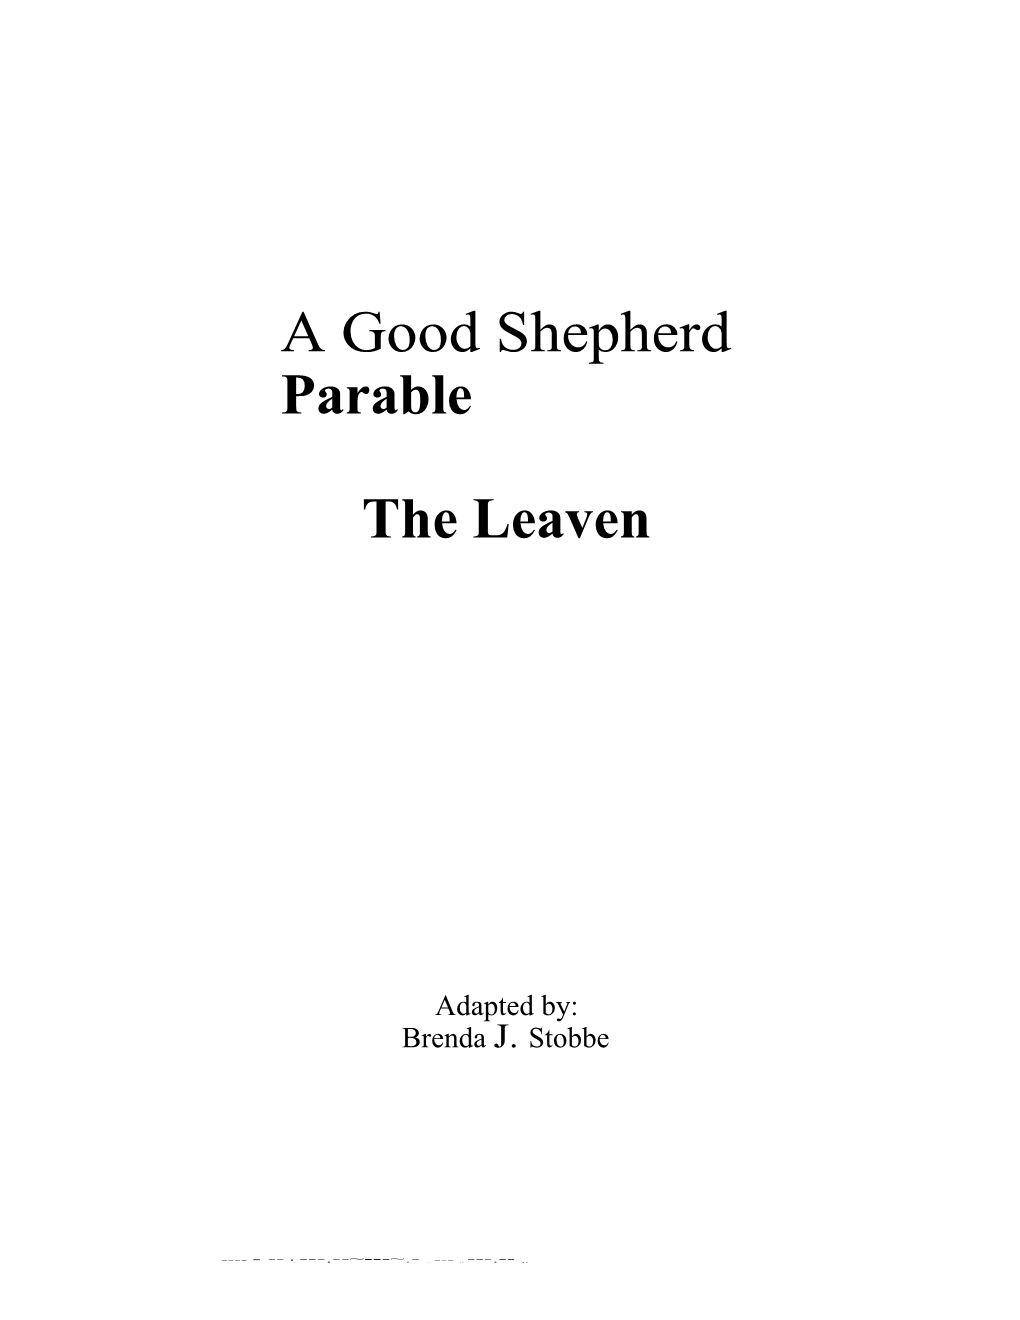 A Good Shepherd Parable